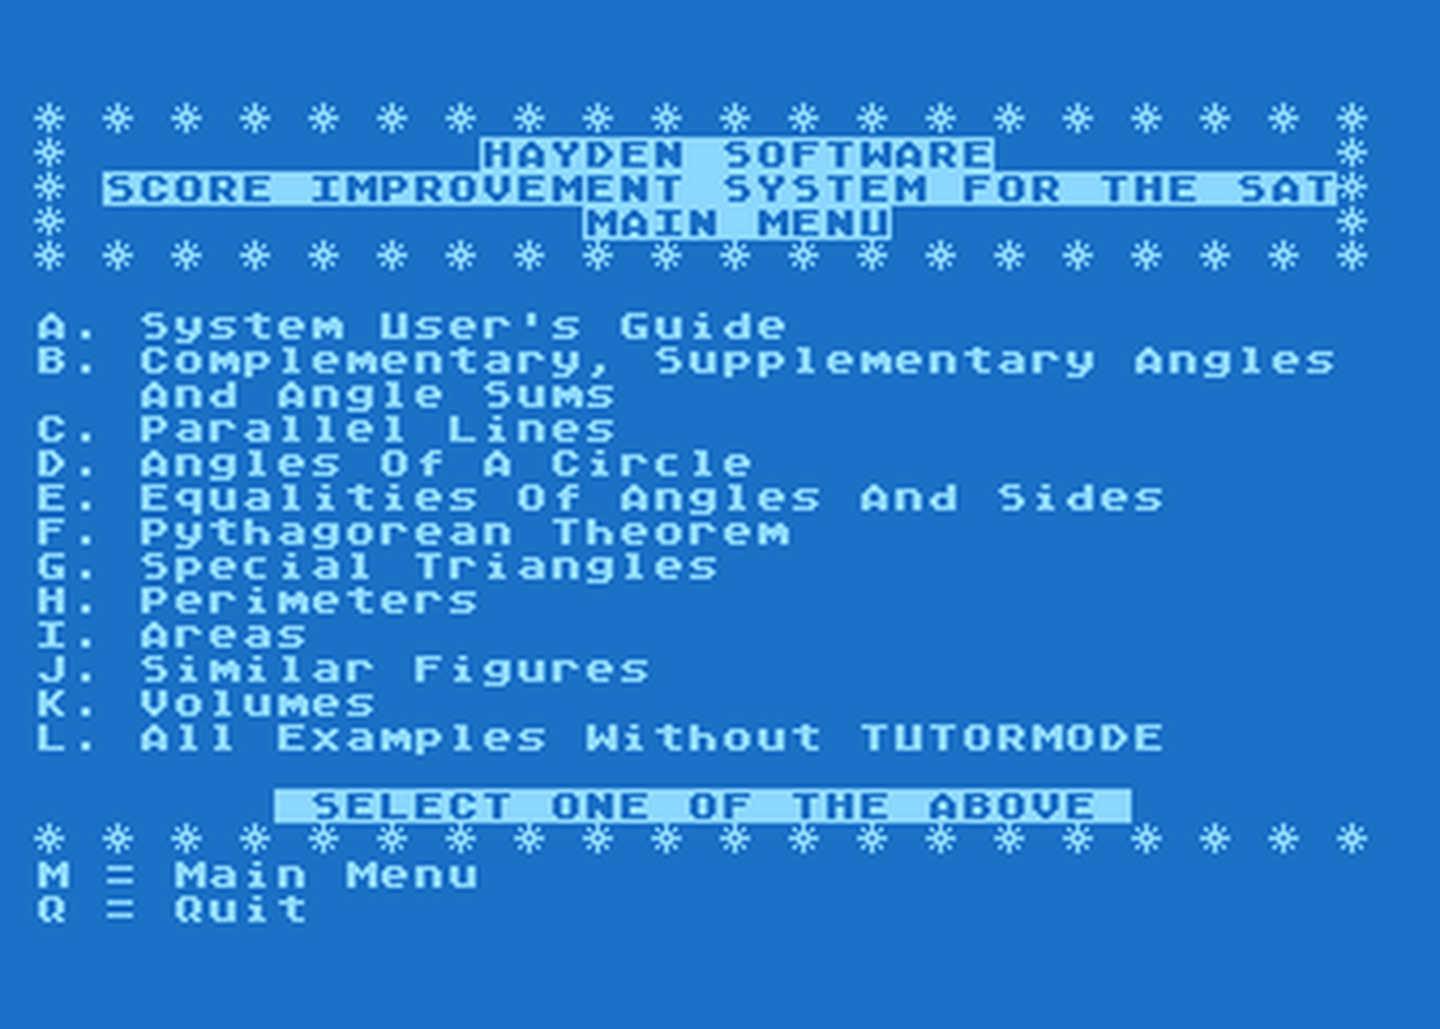 Atari GameBase Score_Improvement_System_for_the_SAT_-_Geometry Hayden_Software 1984